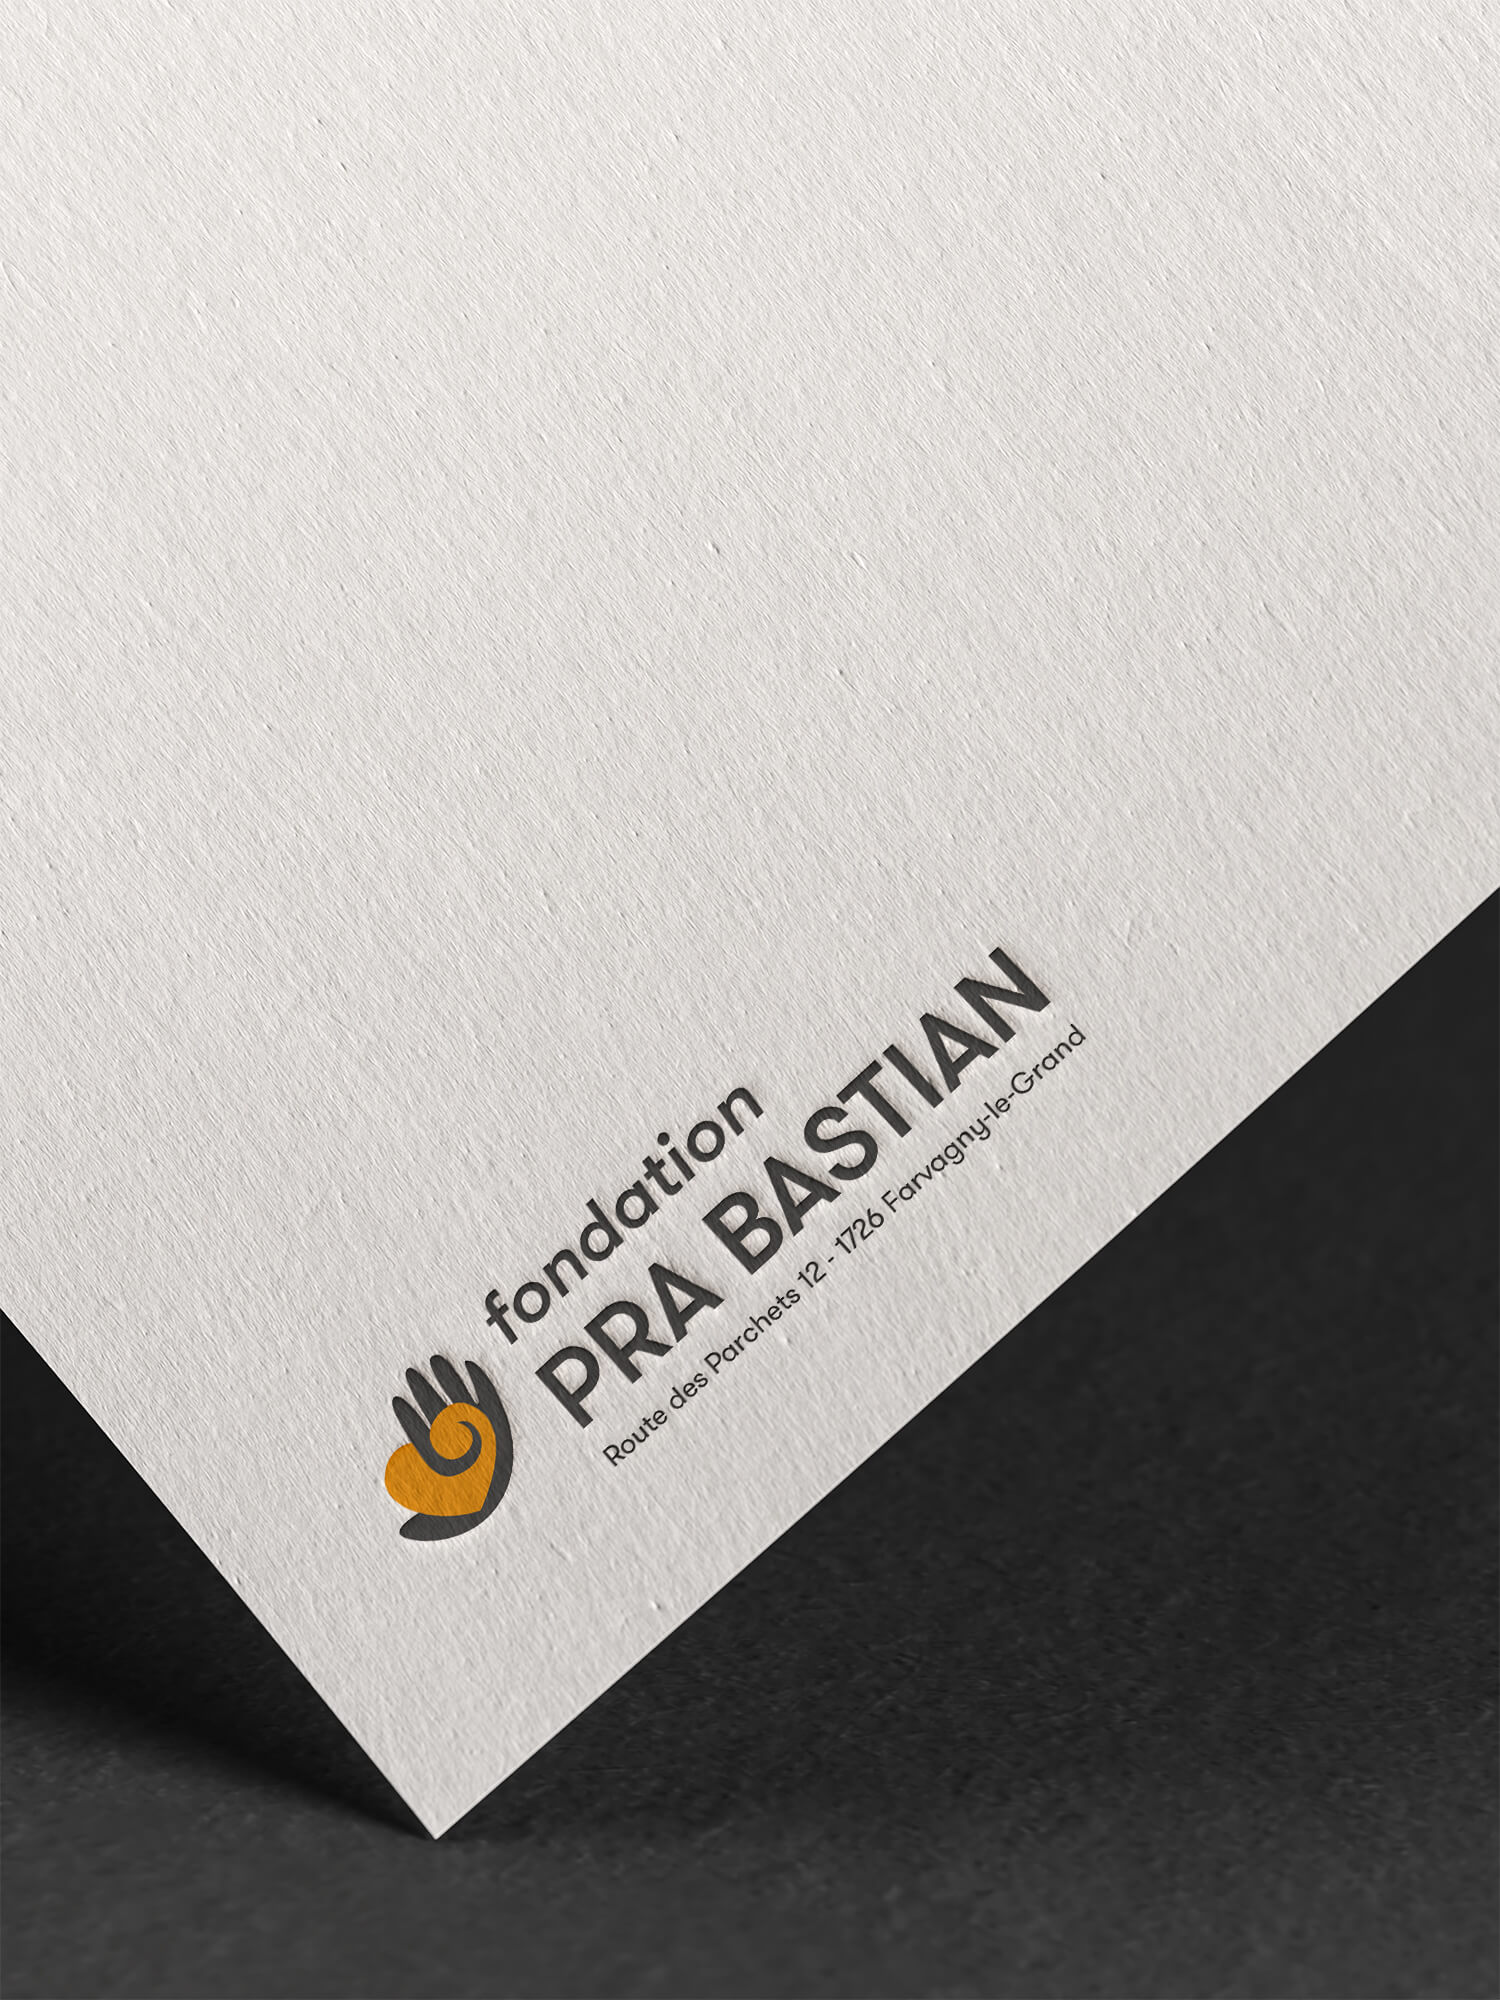 Fondation Pra Bastian logo